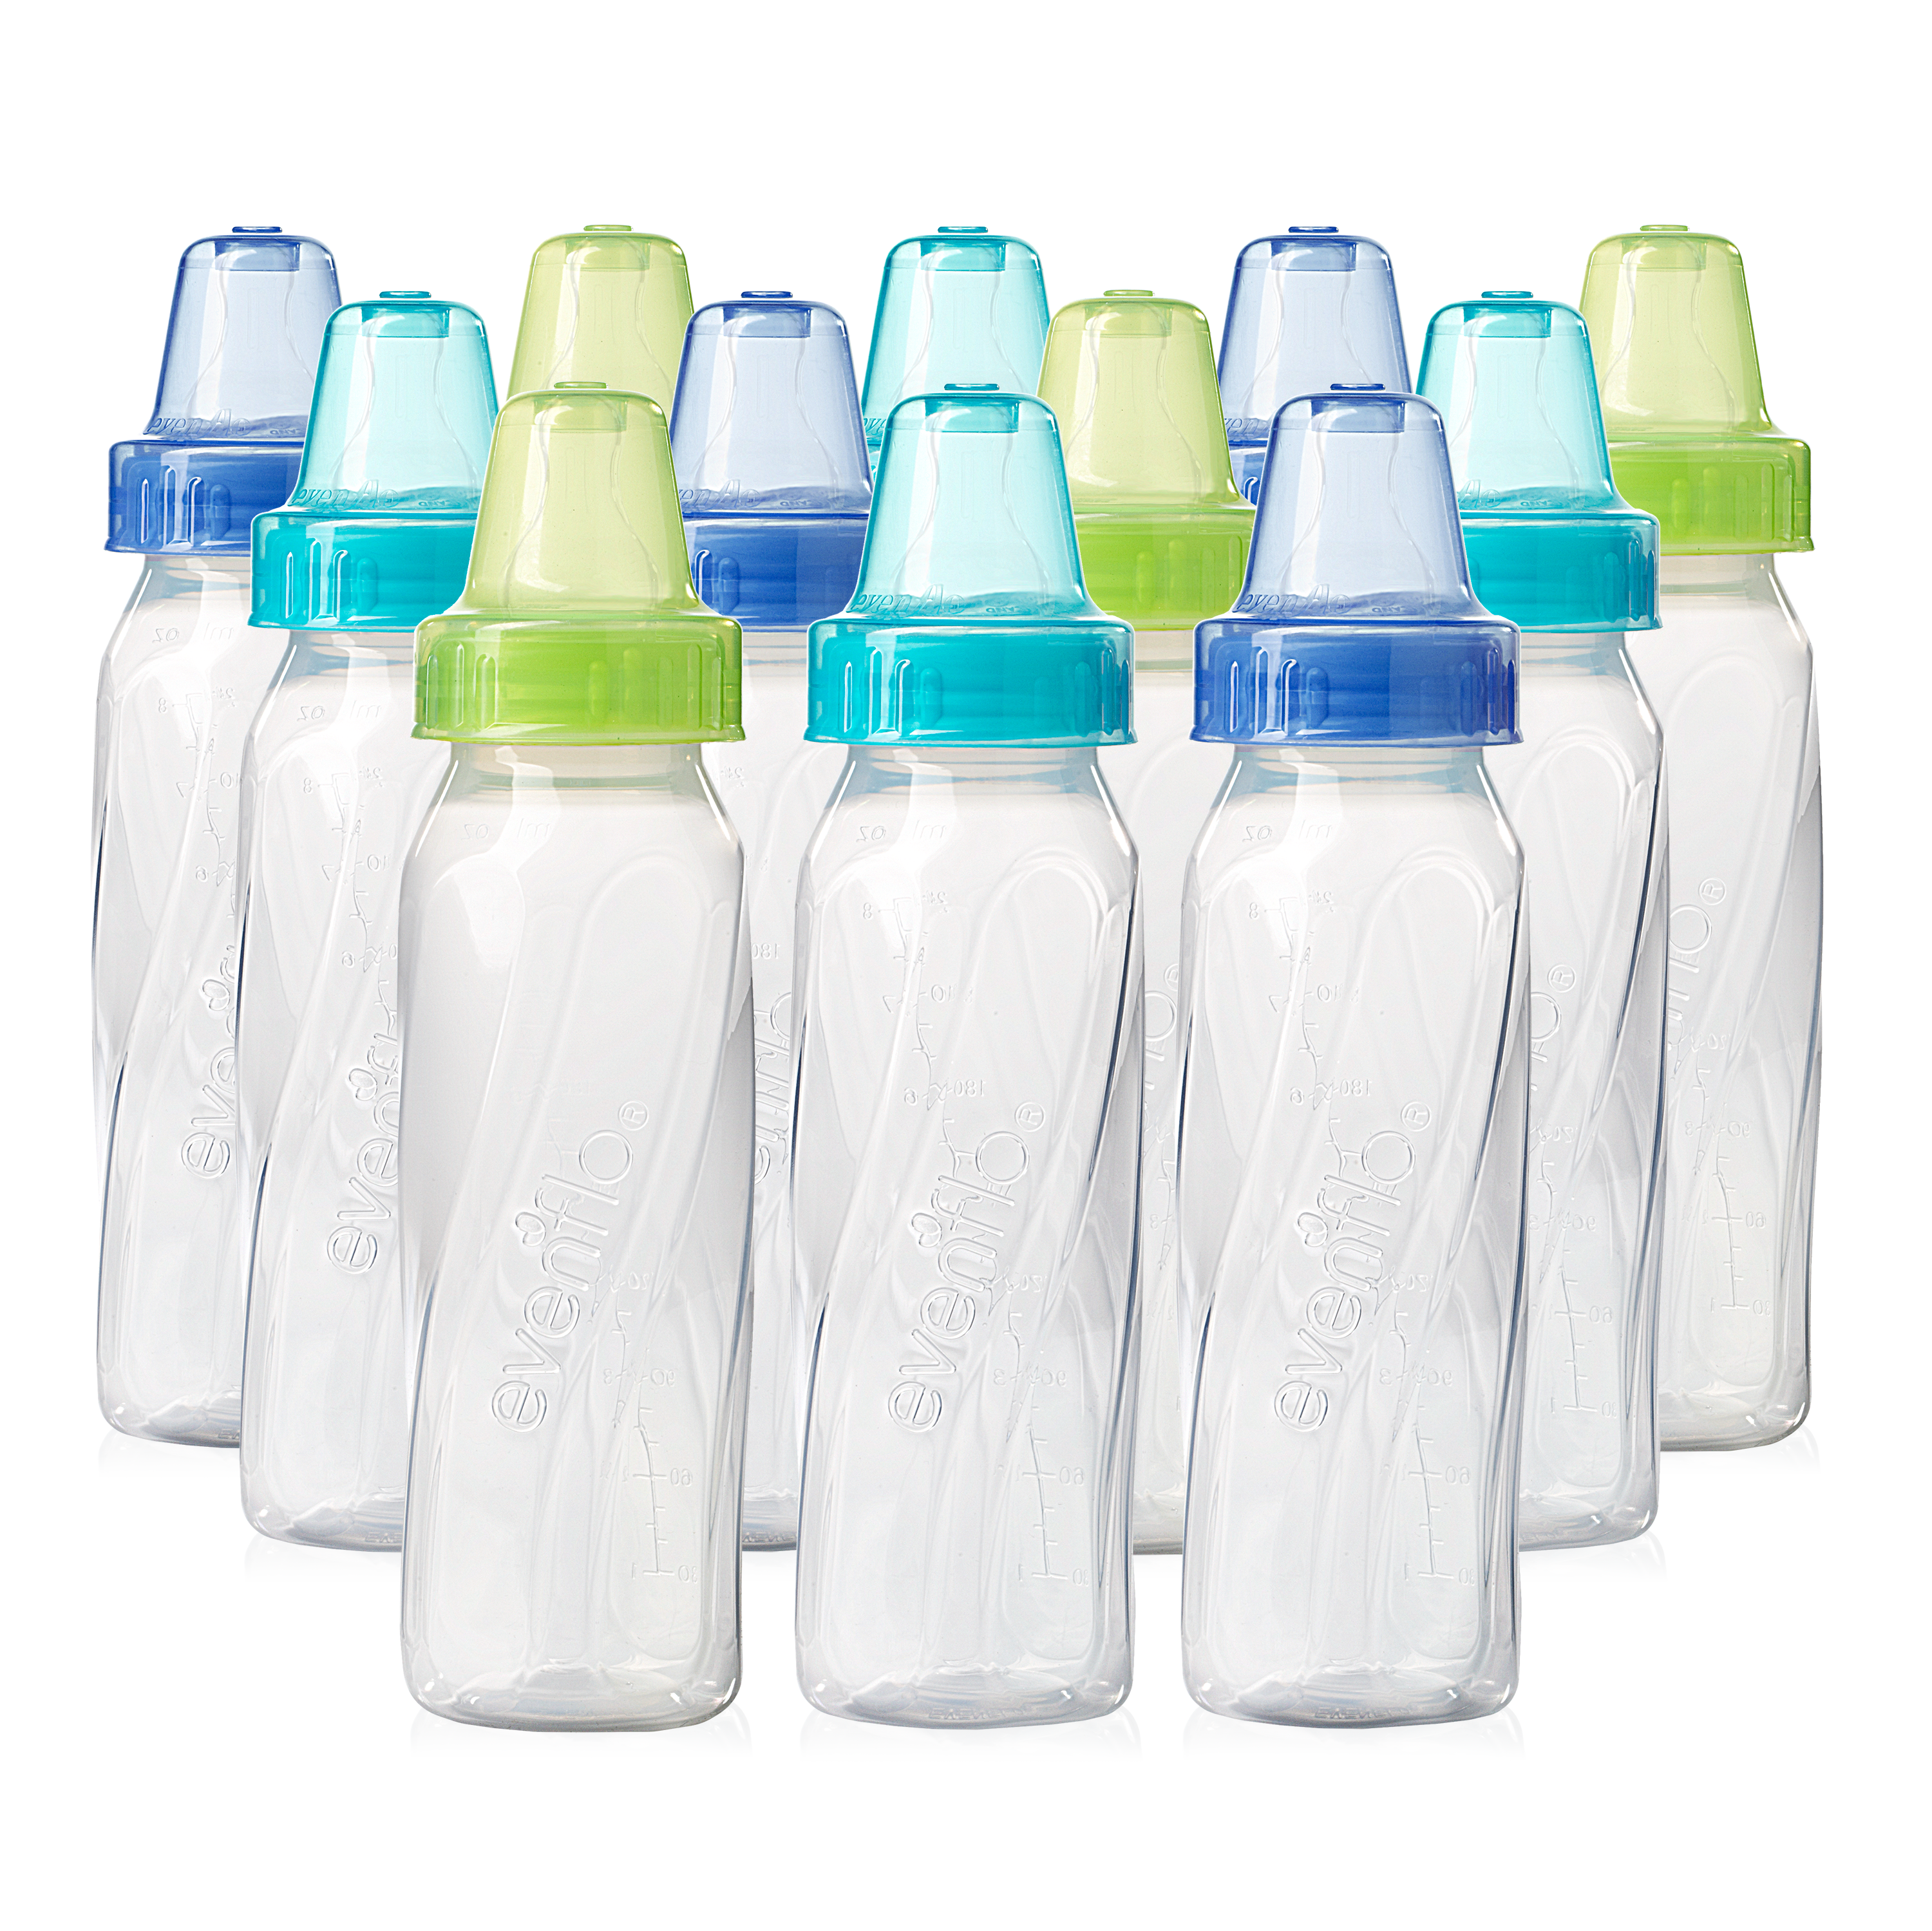 🍼 Evenflo Baby Bottles, Nipples & Accessories – Evenflo Feeding